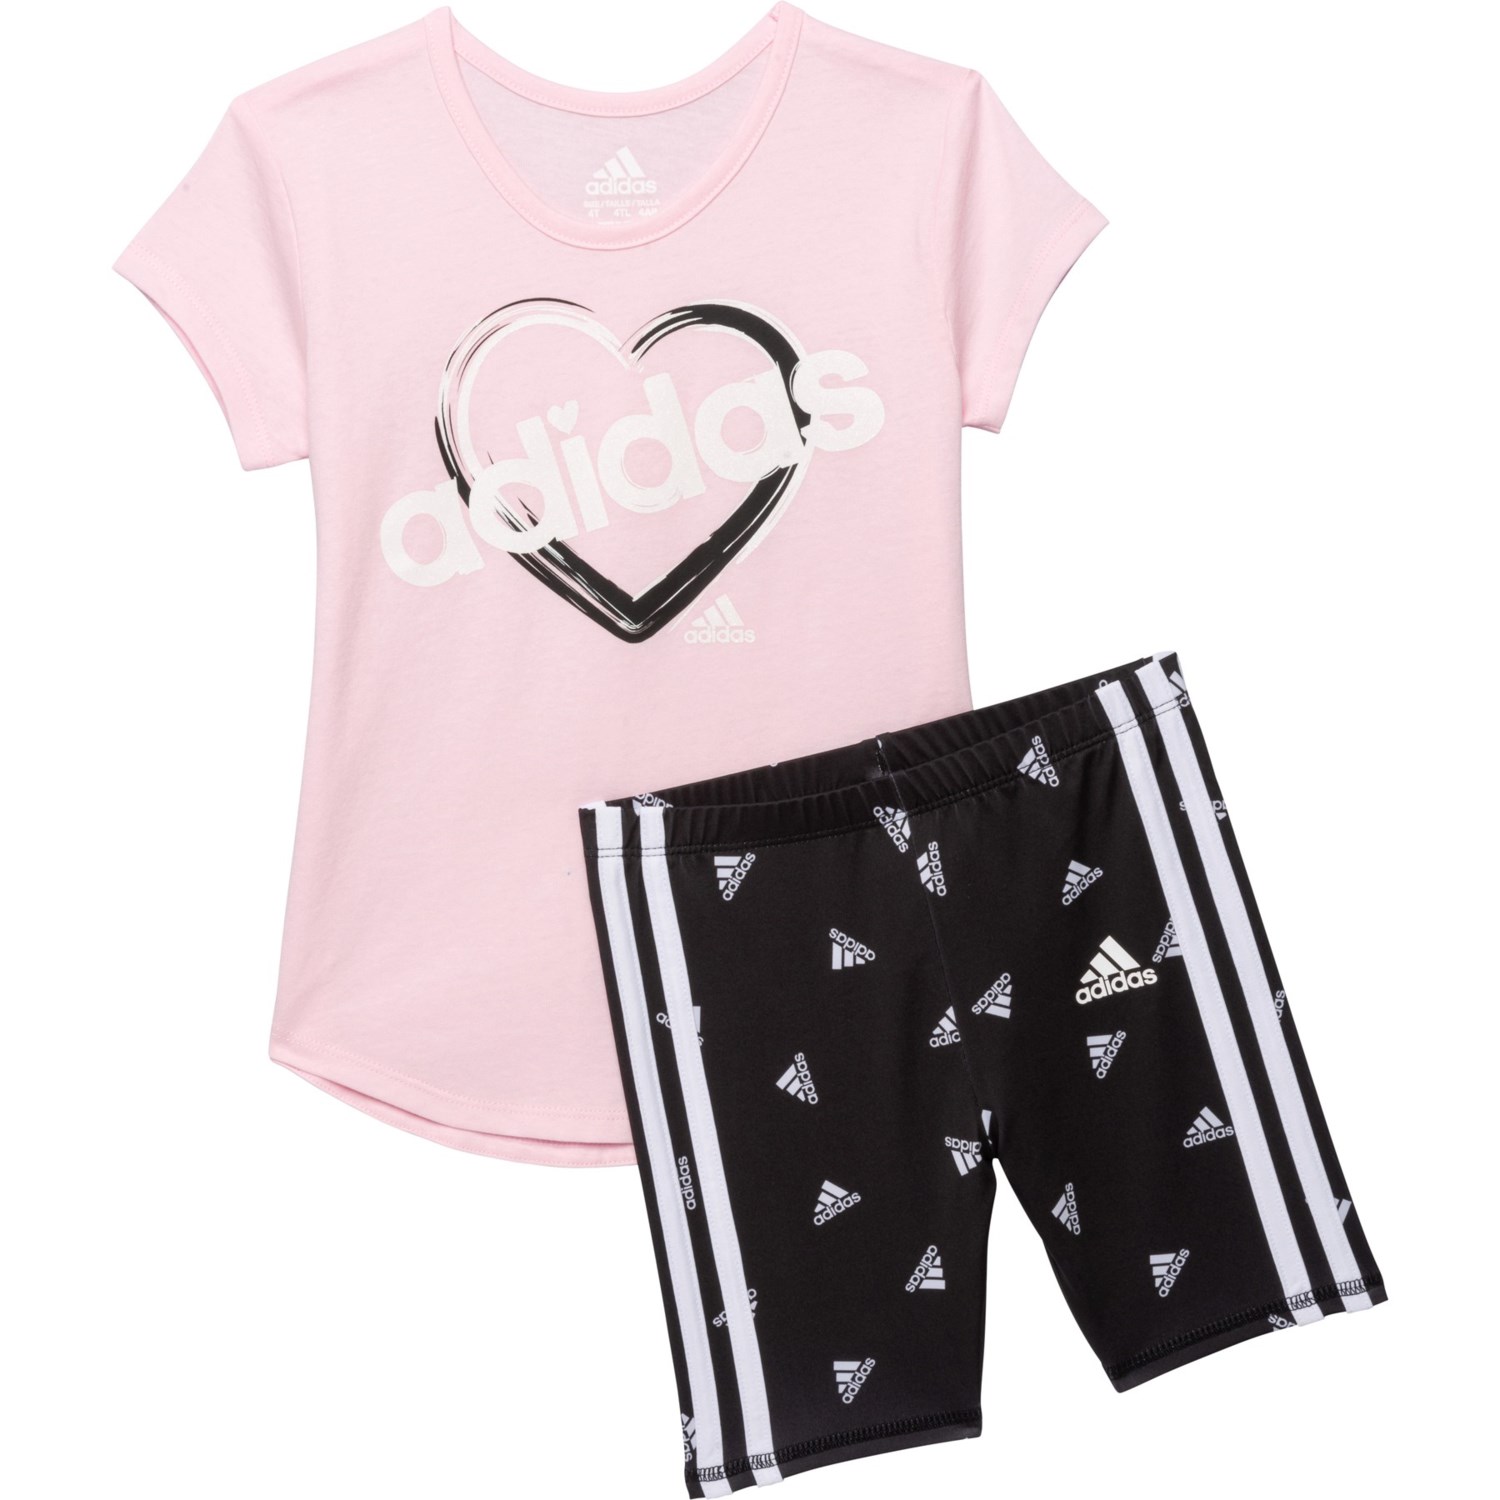 Adidas Toddler Girls Cotton T-Shirt and Printed Bike Shorts Set - Short Sleeve